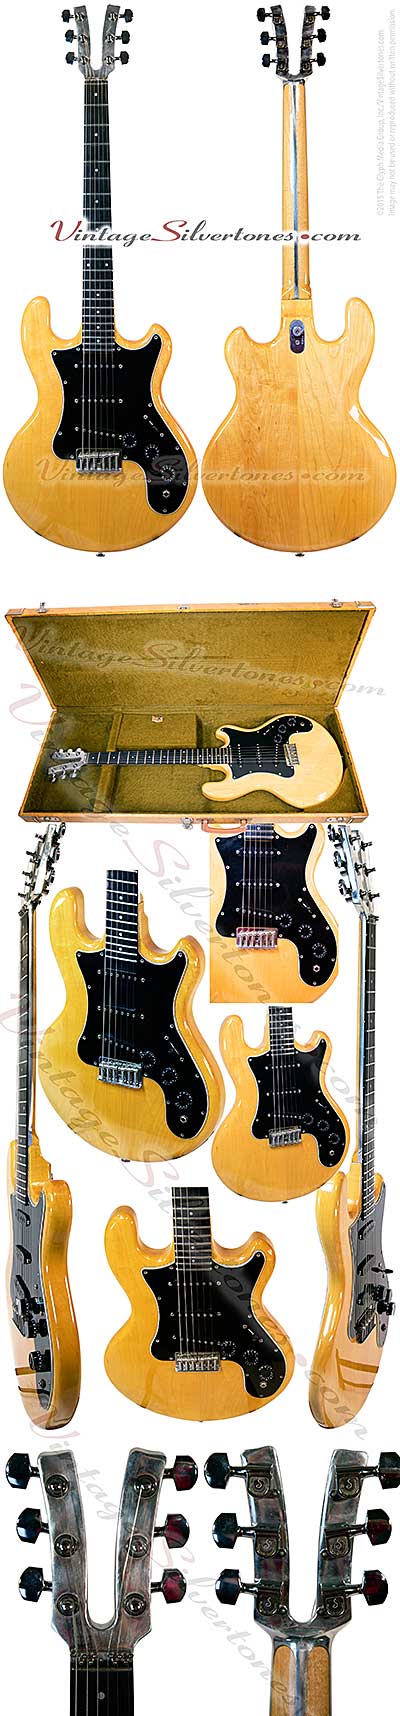 Kramer DMZ 3000-Neptune, NJ 3 pickup, electric guitar, 1979, natural blonde finish, black pickguard, double cutaway